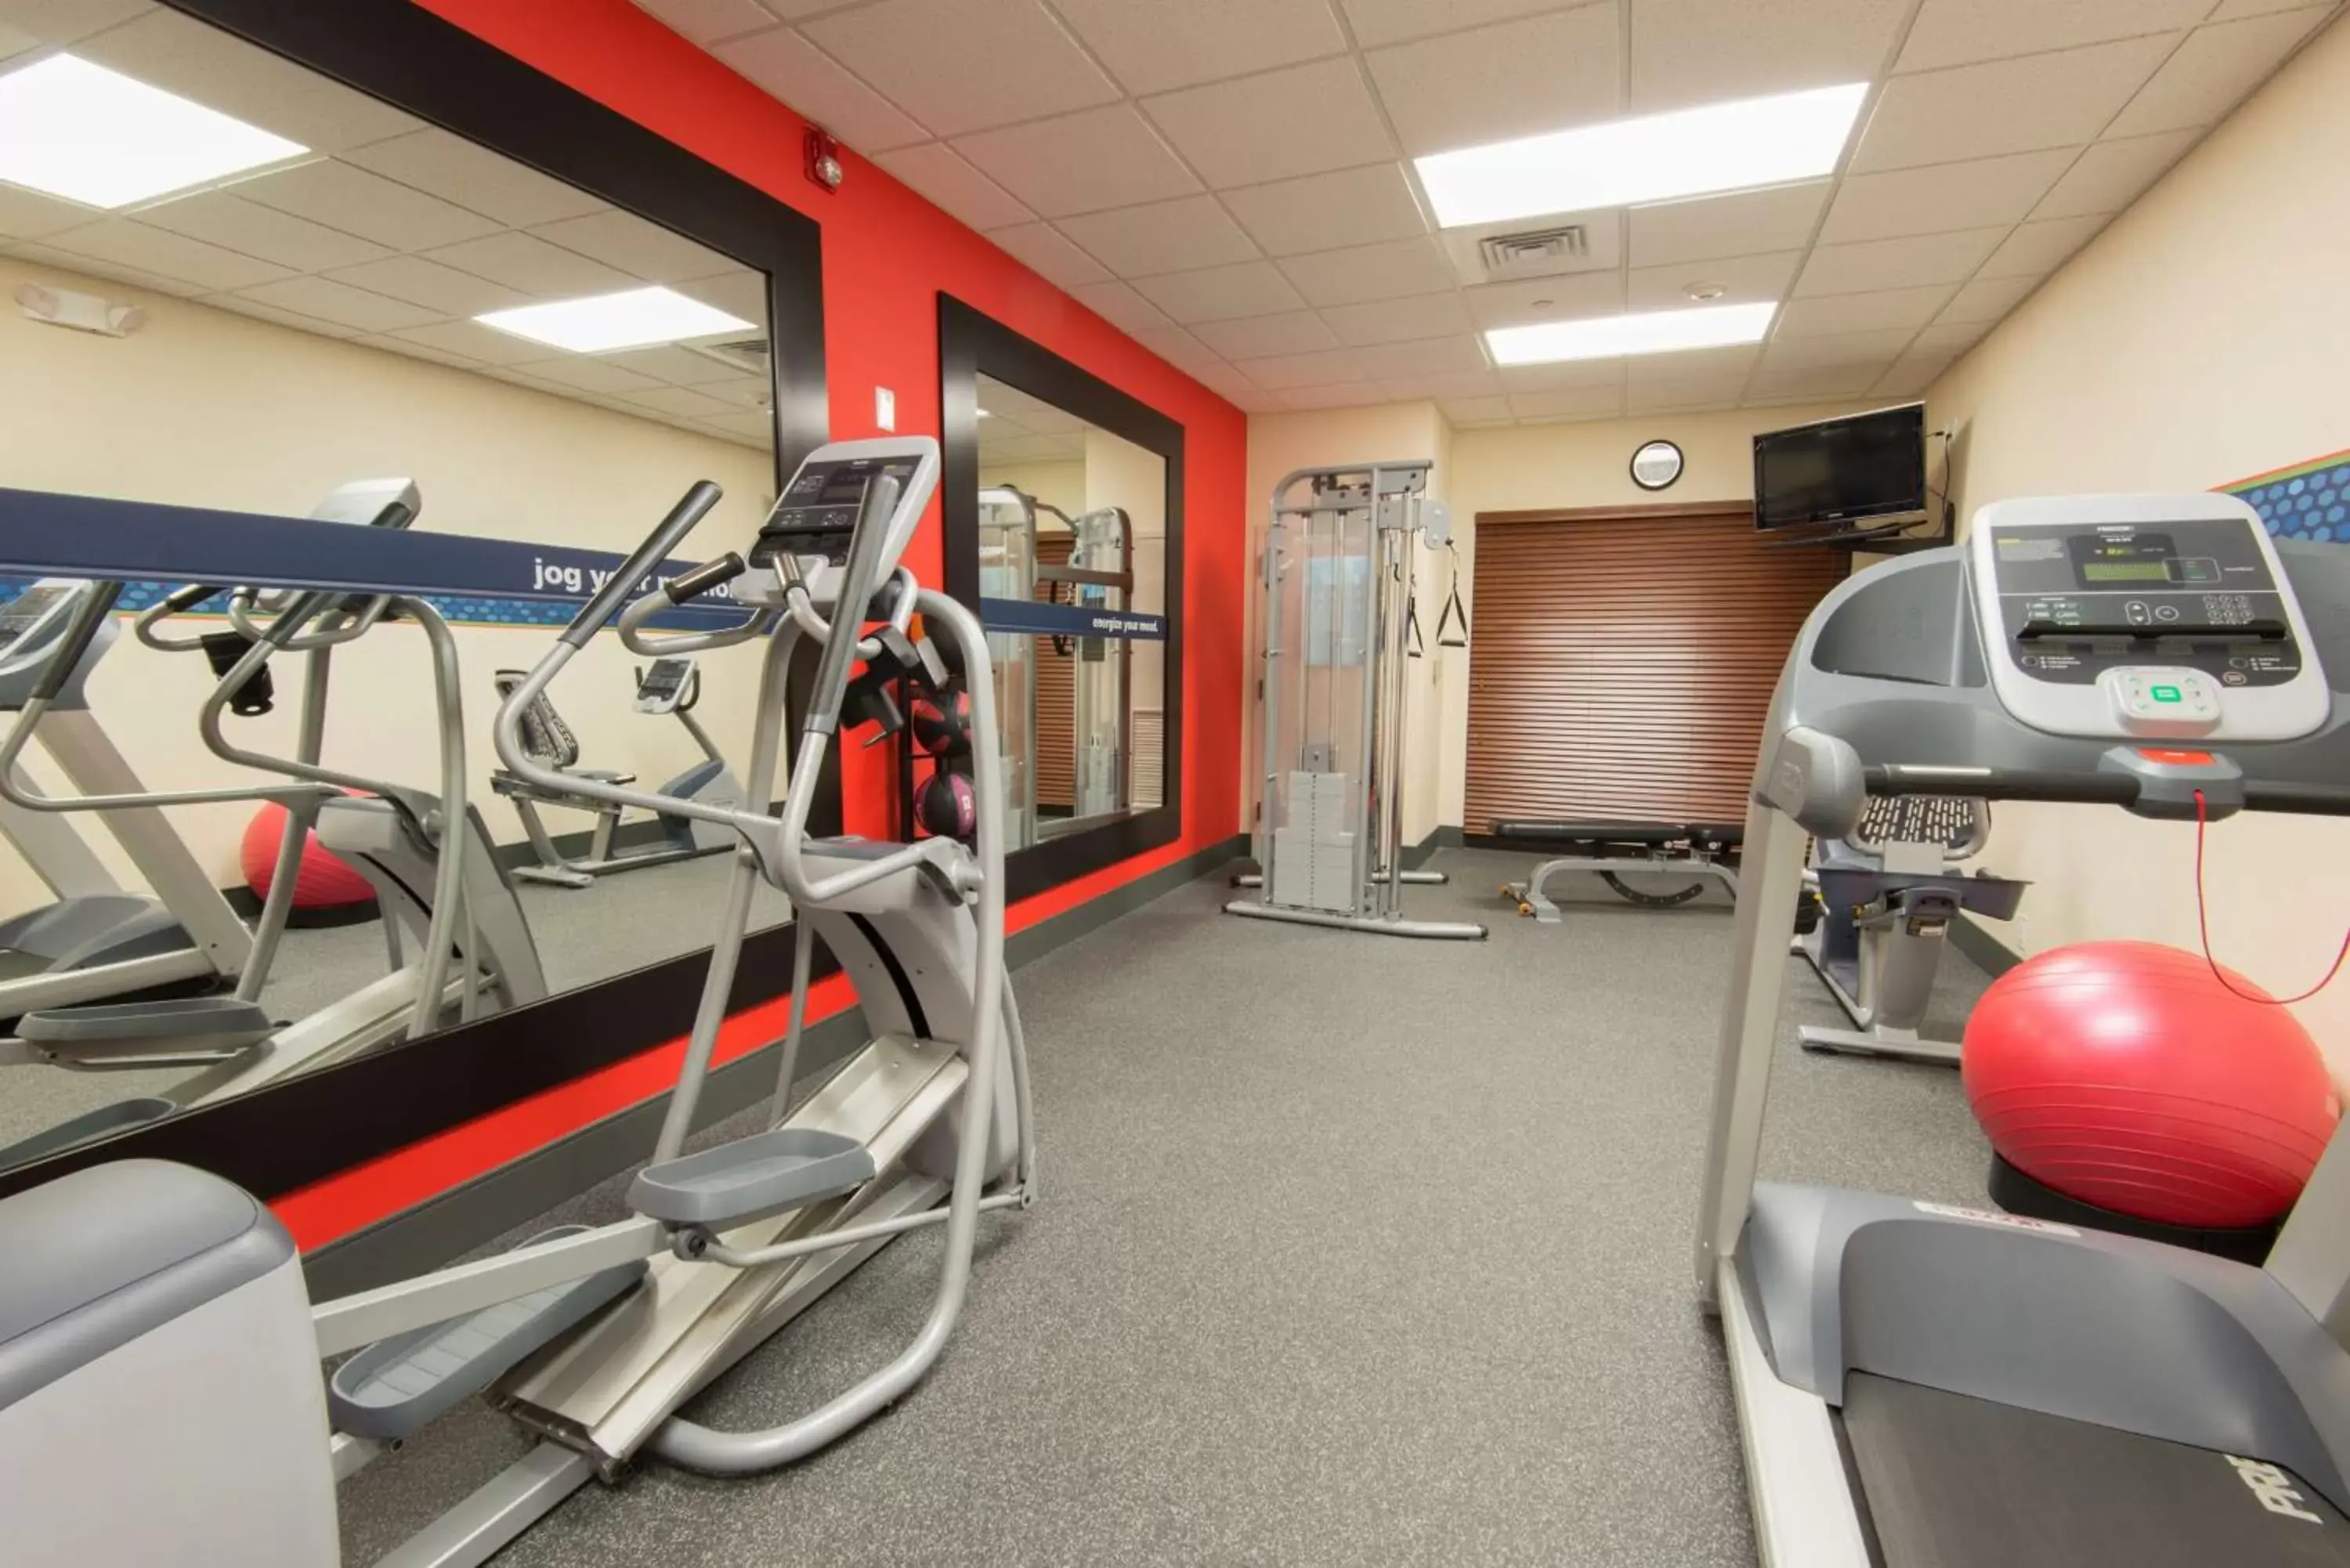 Fitness centre/facilities, Fitness Center/Facilities in Hampton Inn Mount Airy